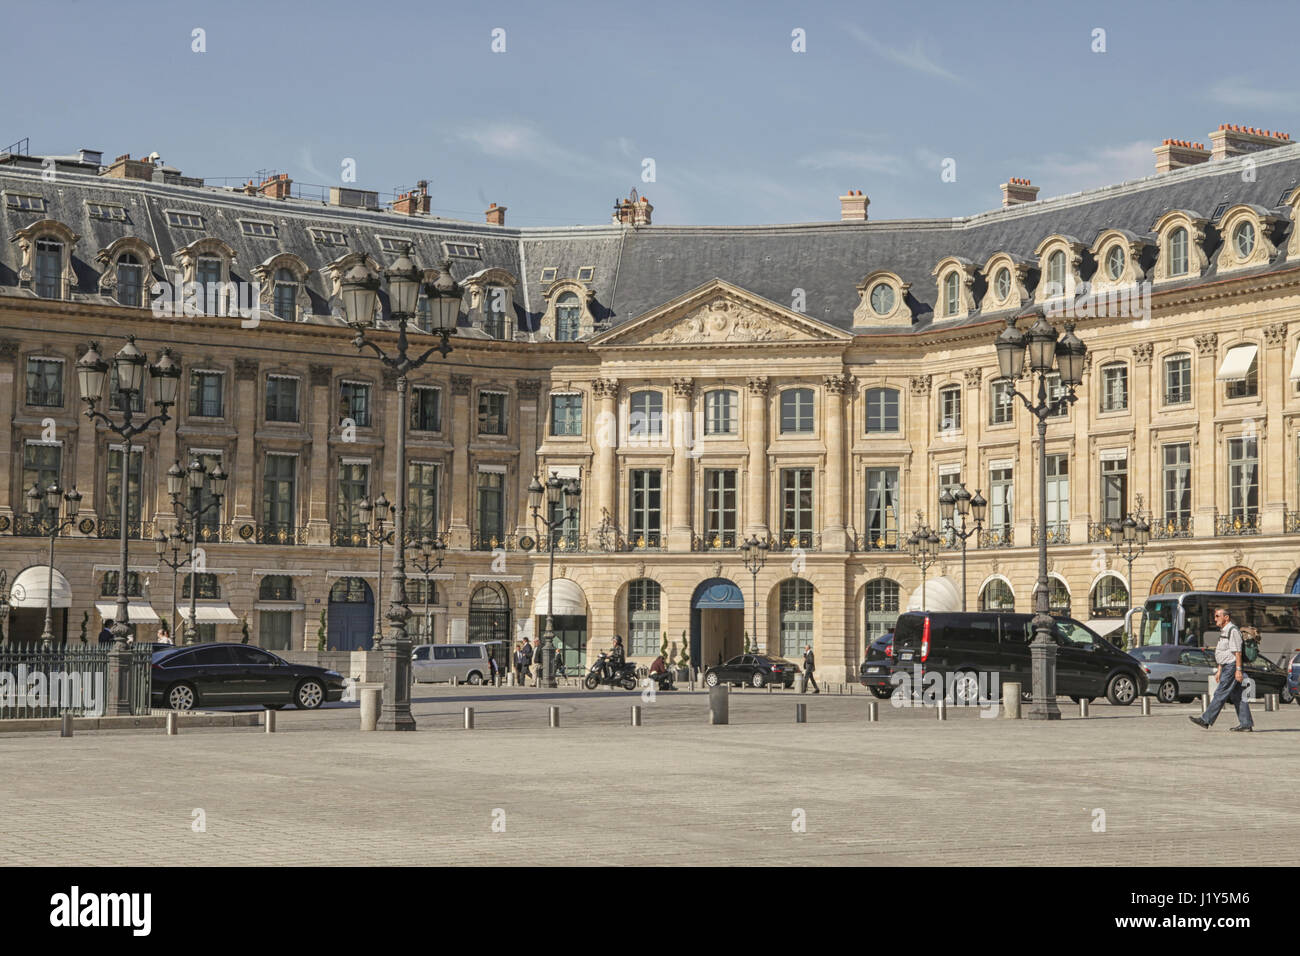 File:Place Vendôme - Hôtel Ritz (Paris).jpg - Wikimedia Commons